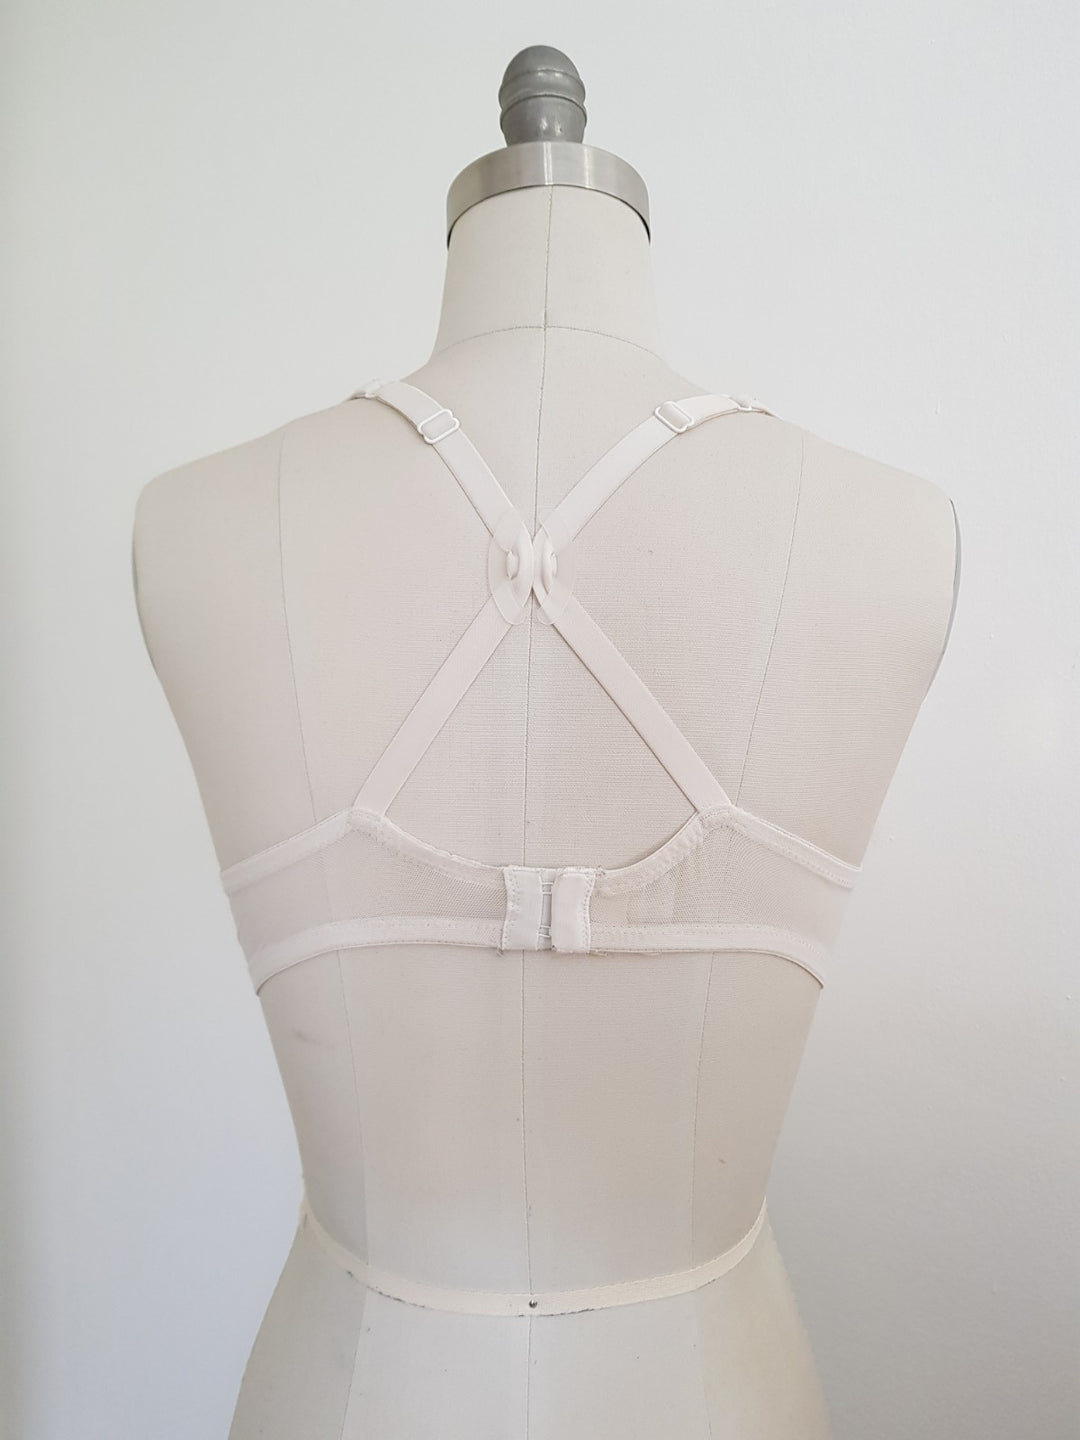 Clip for bra straps - crosses/hides bra straps